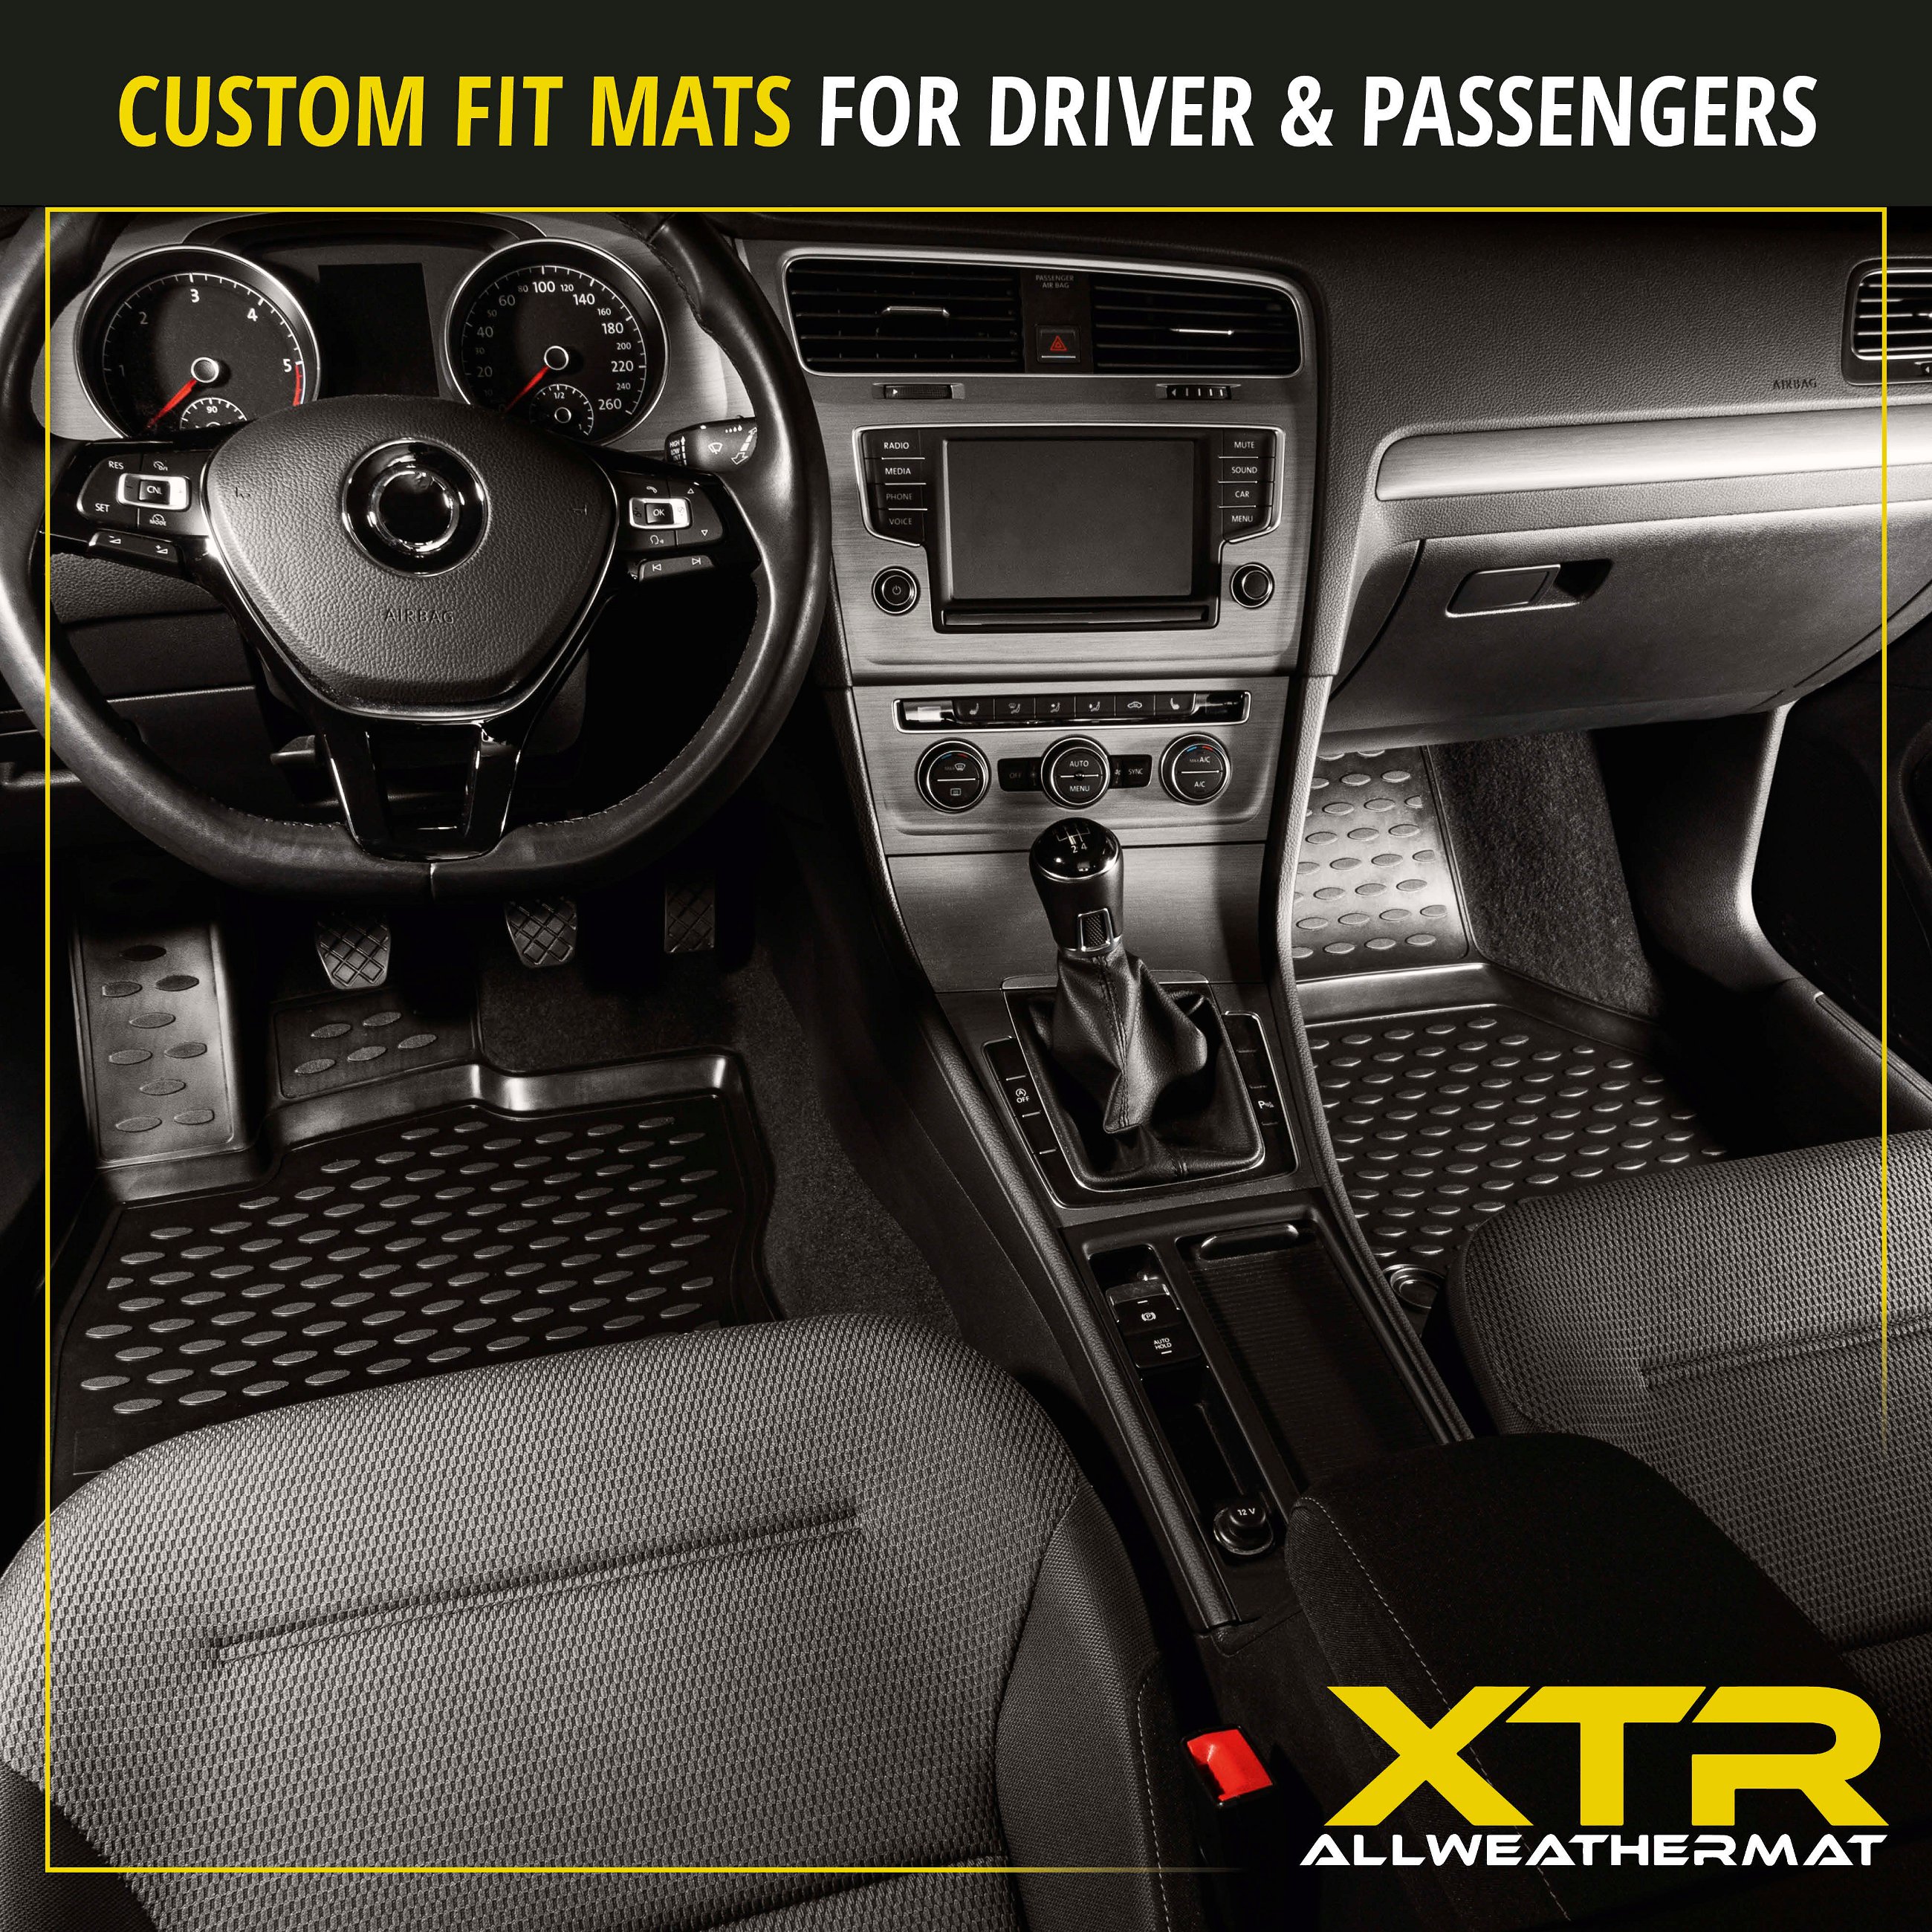 XTR Rubber Mats for Mazda CX-5 11/2011 - 02/2017